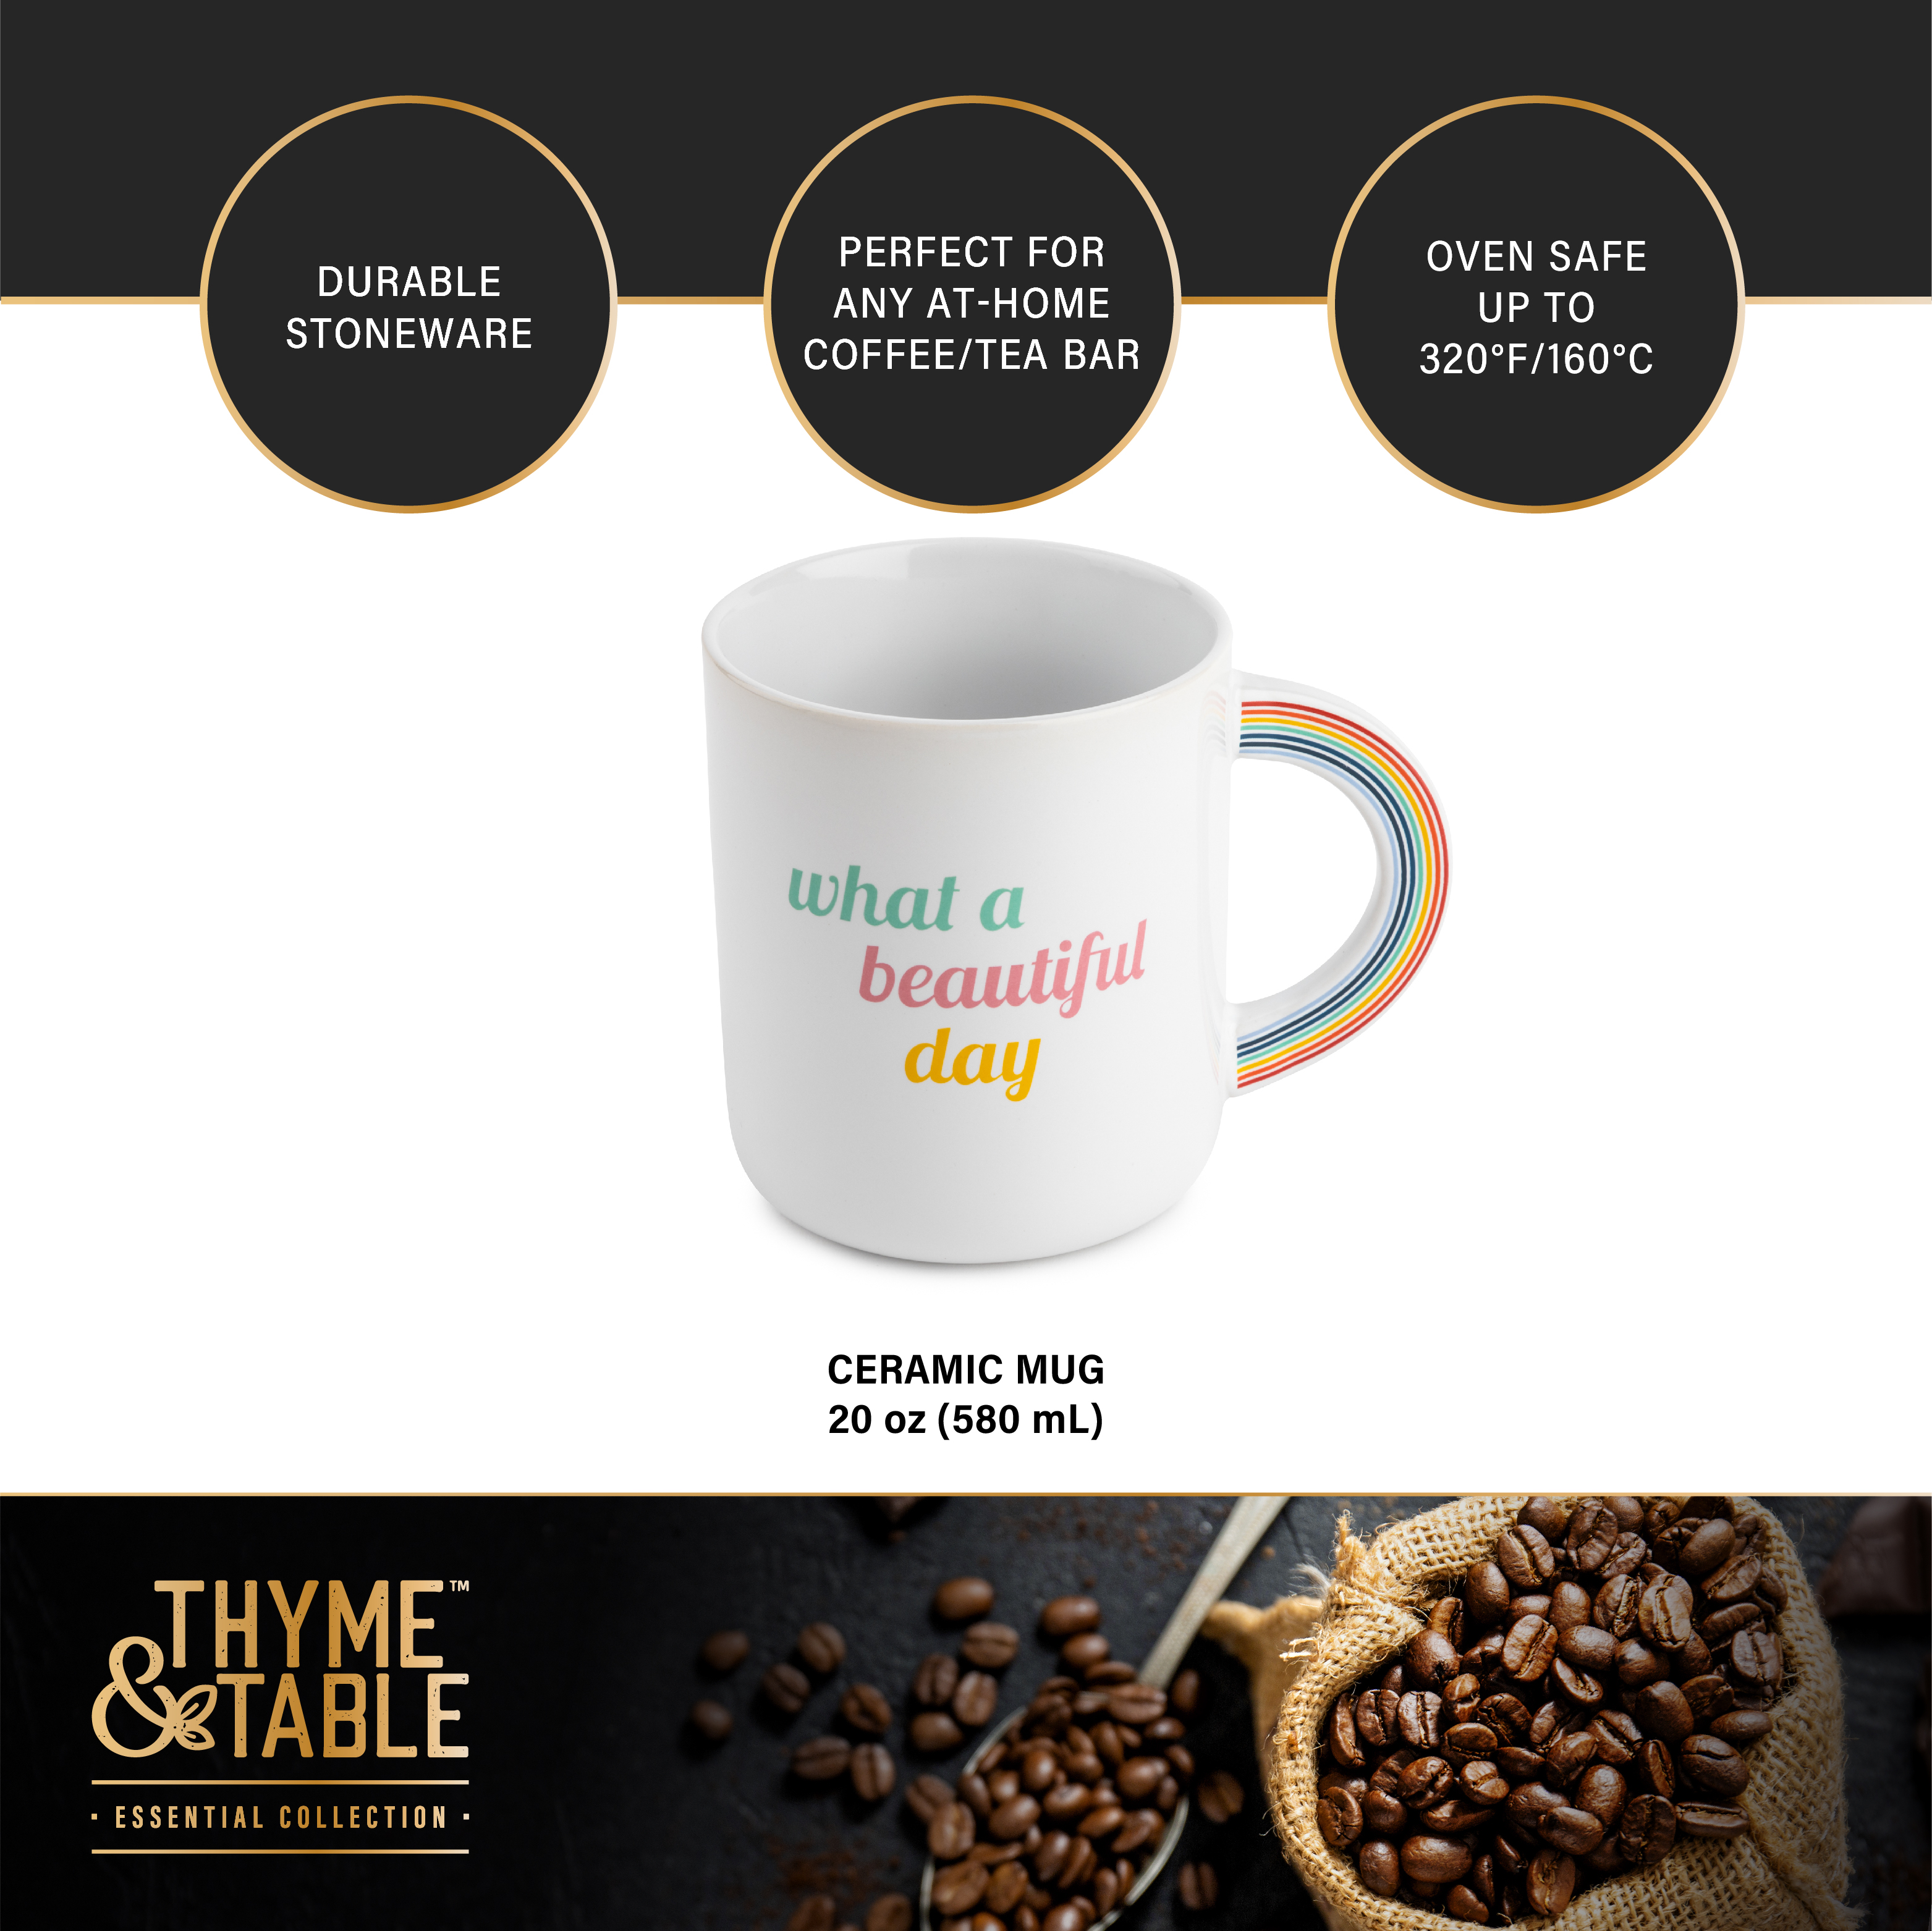 Thyme & Table Beautiful Day Ceramic Coffe Mug, 20 fl oz - image 4 of 6